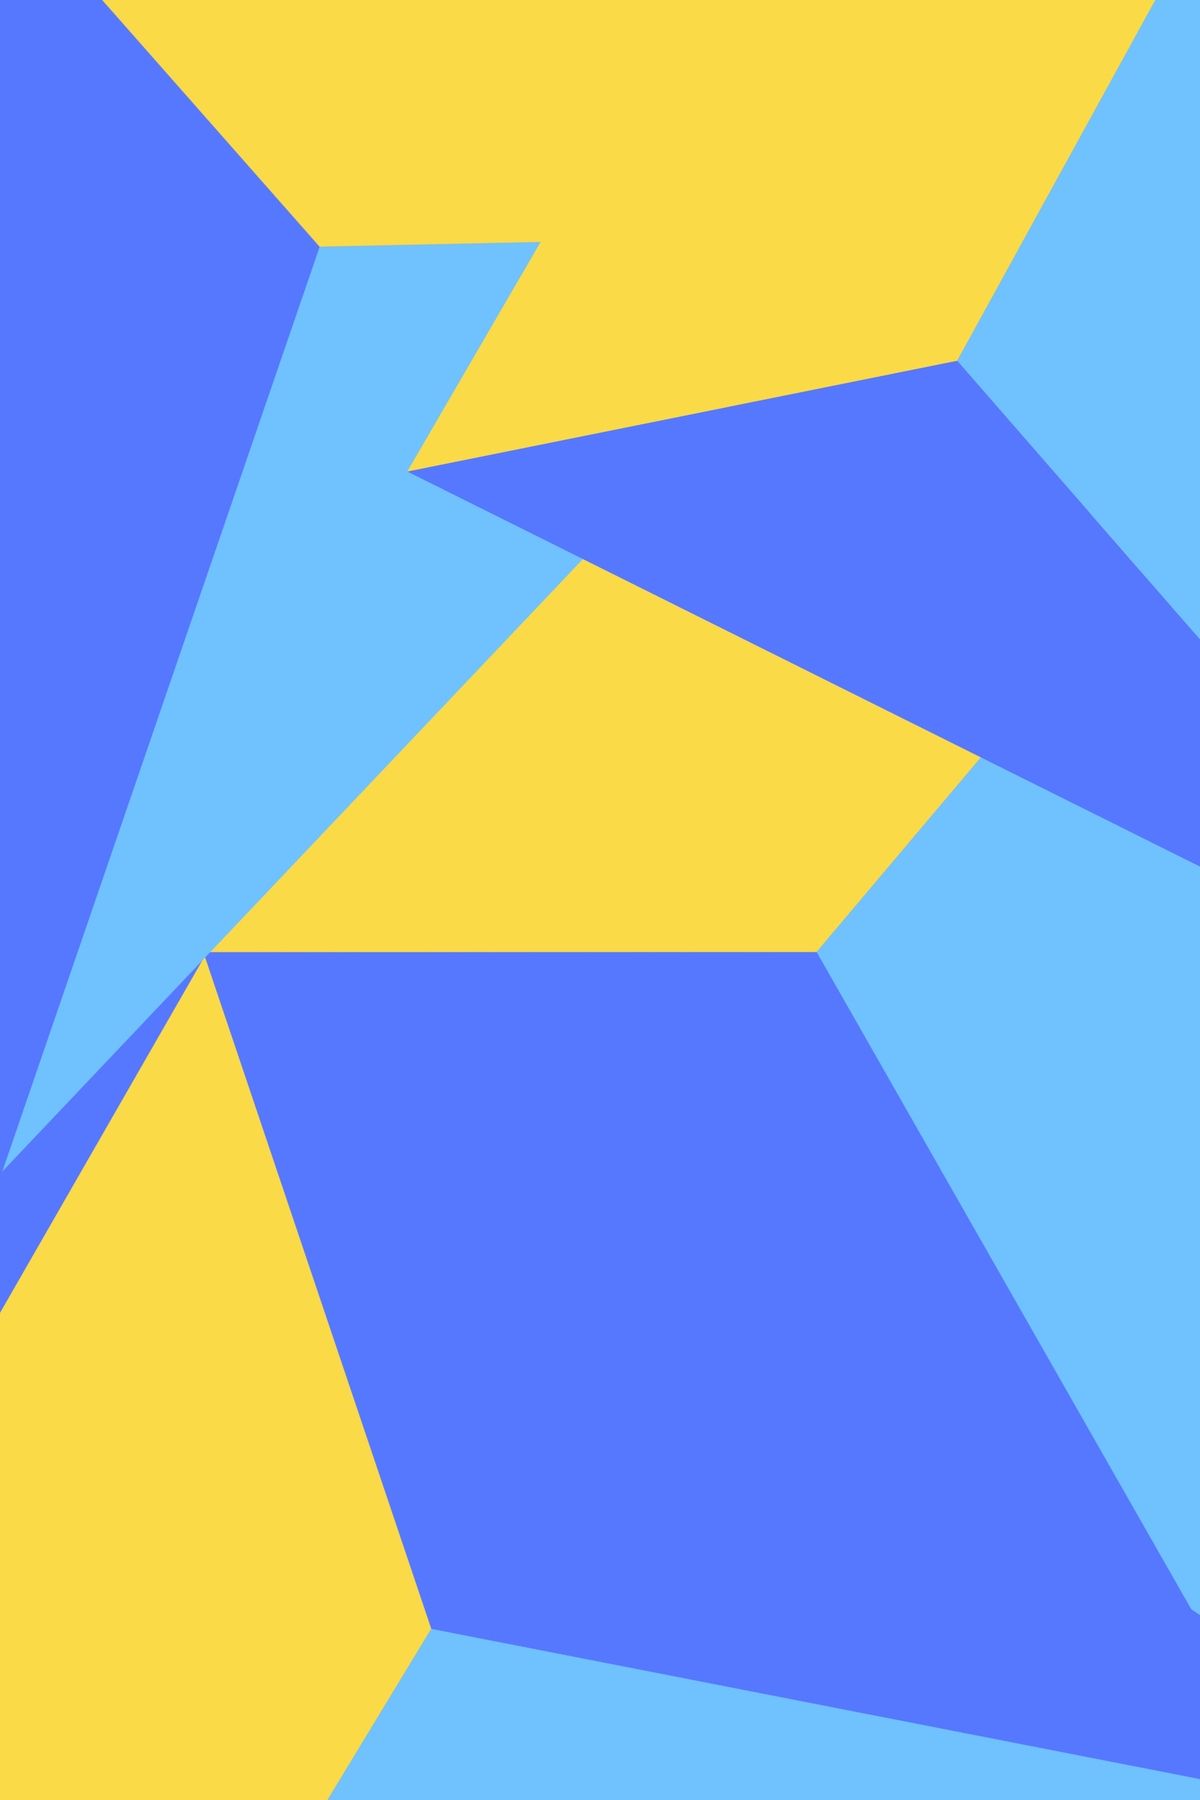 blue geometric patterns